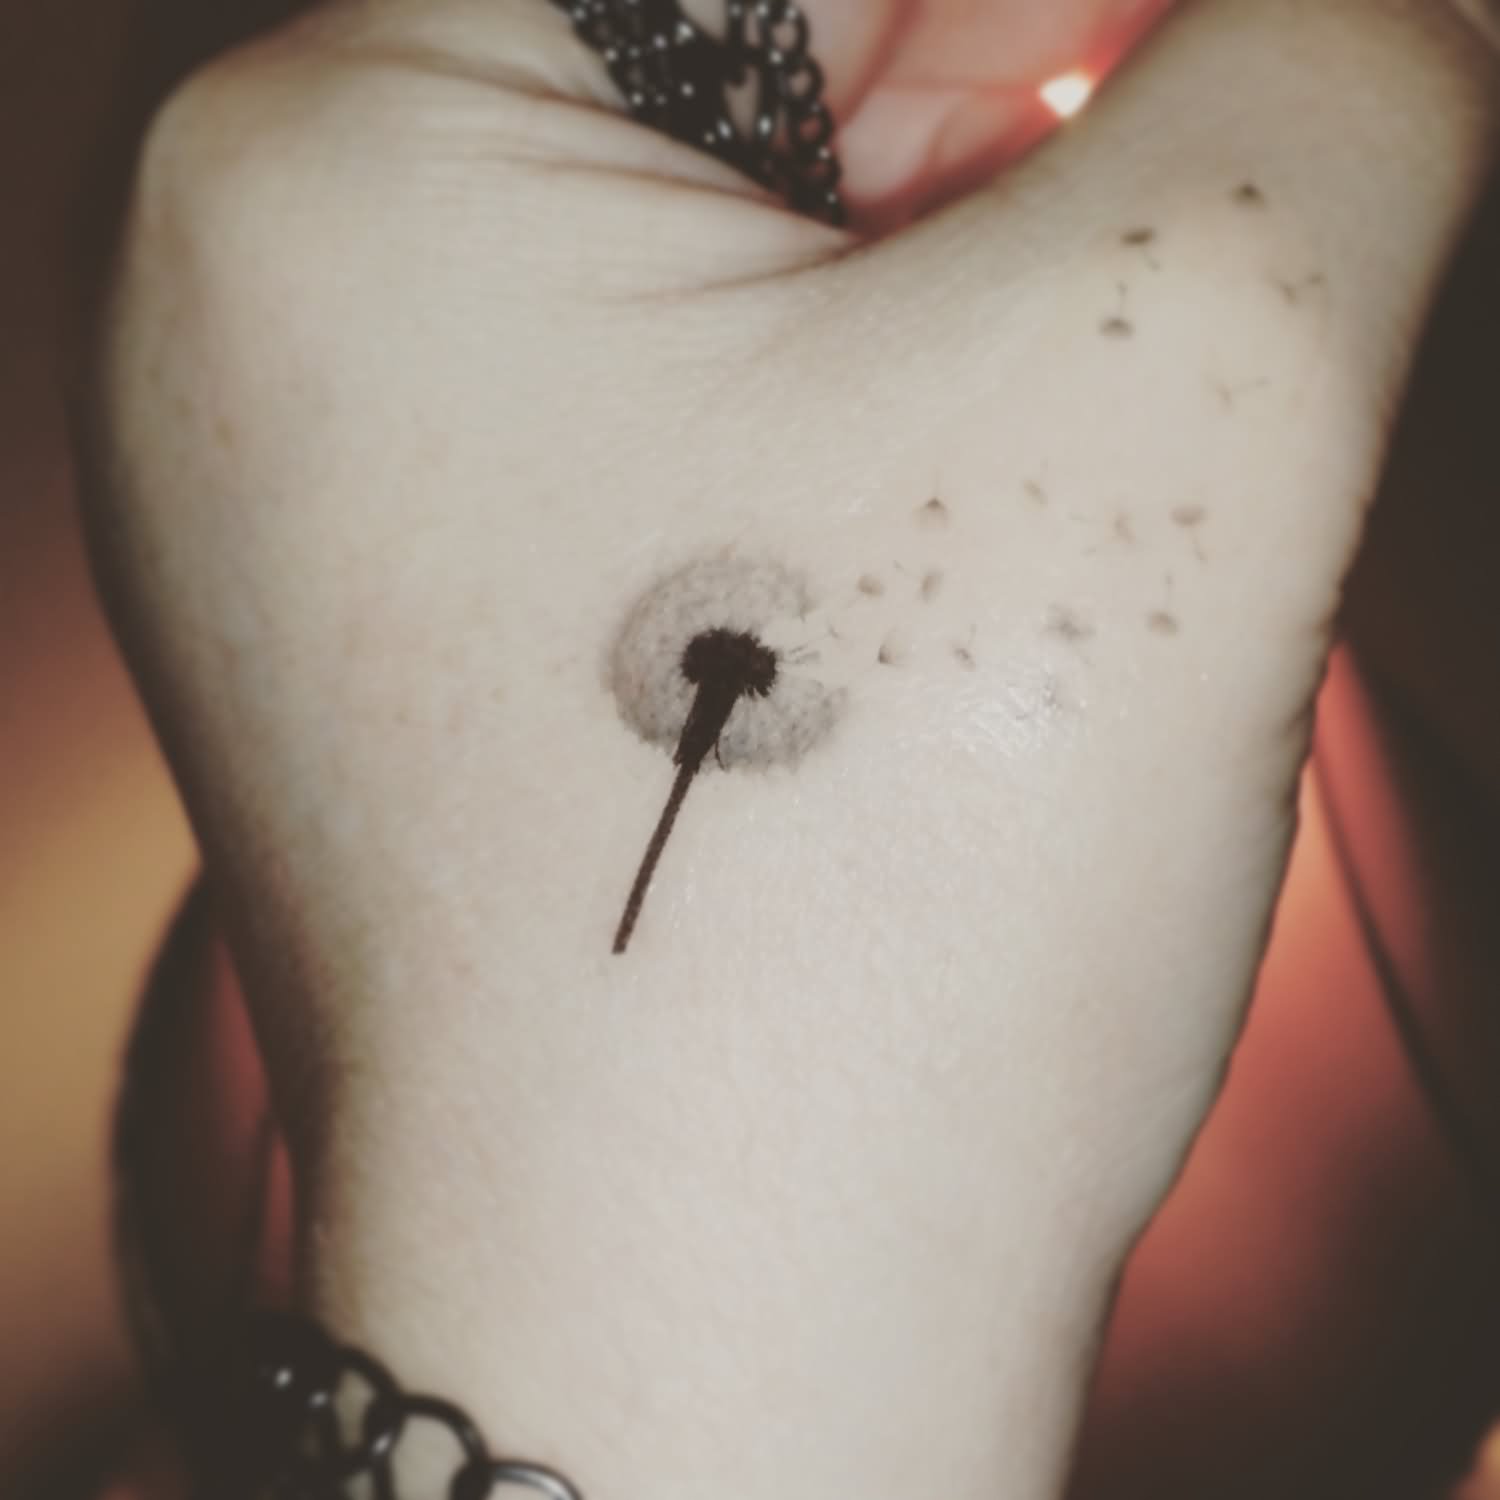 Black Little Dandelion Tattoo On Hand